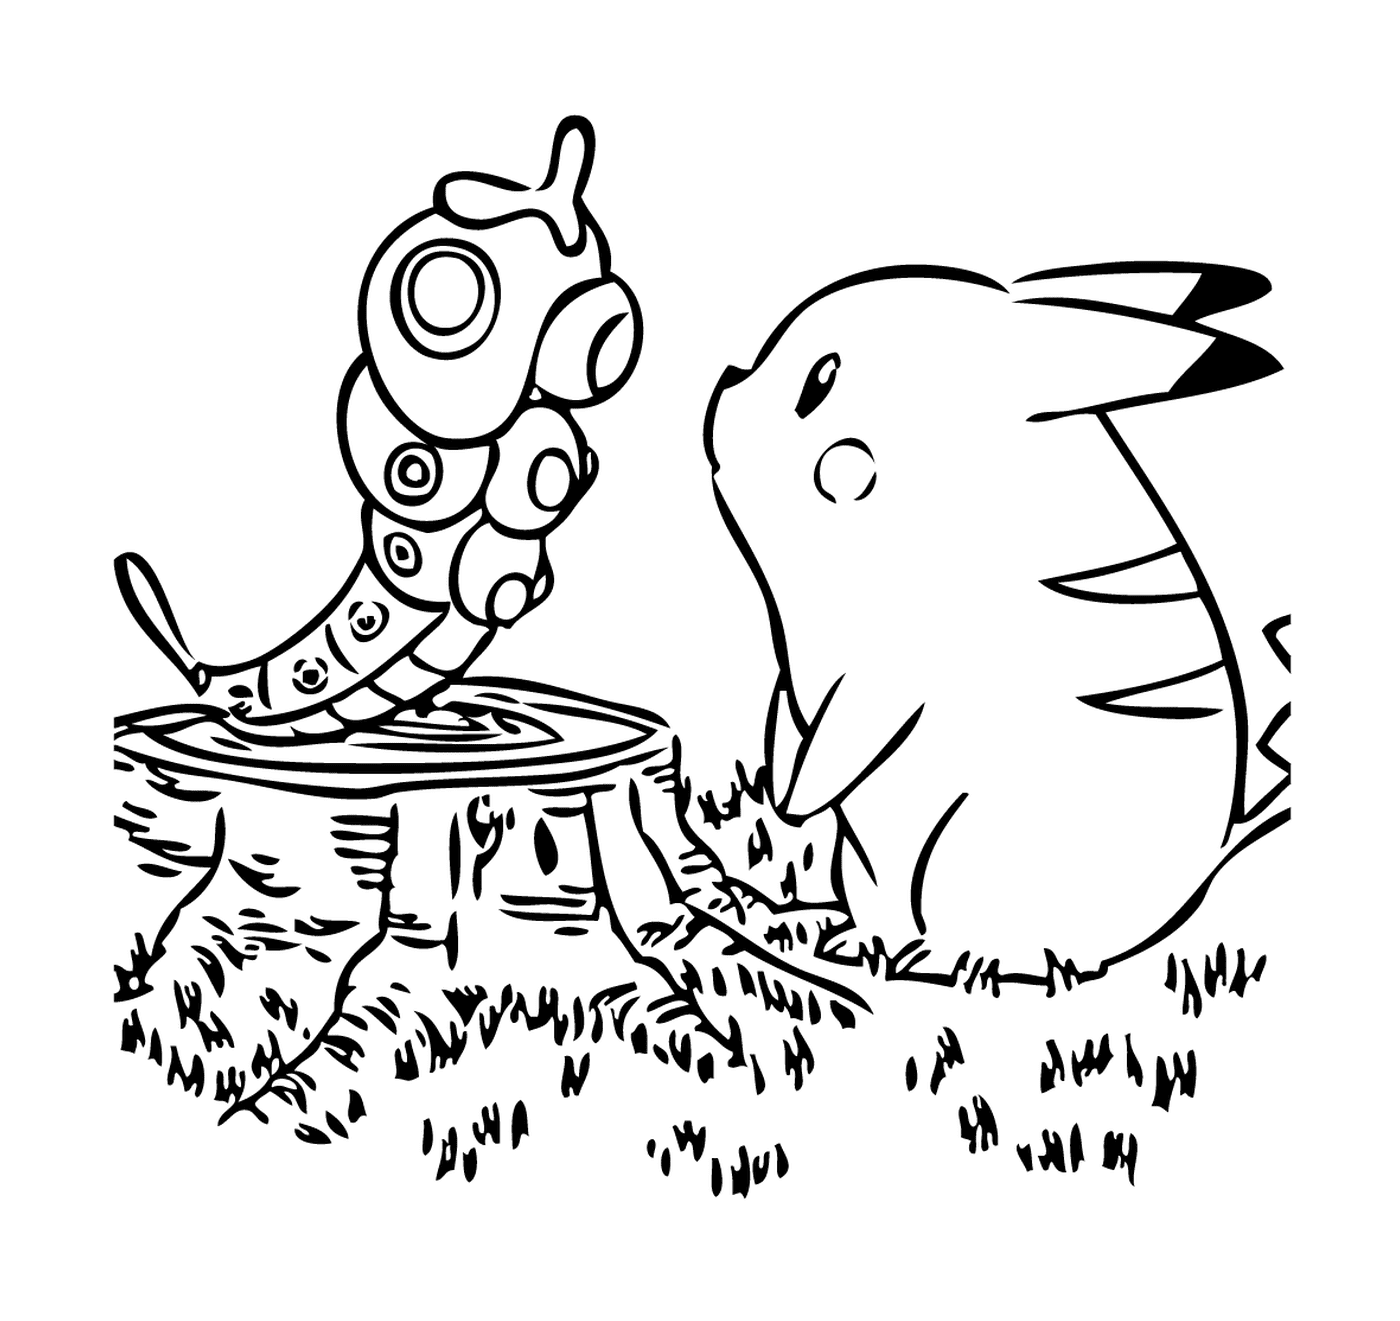  Pikachu and an amazing robot 